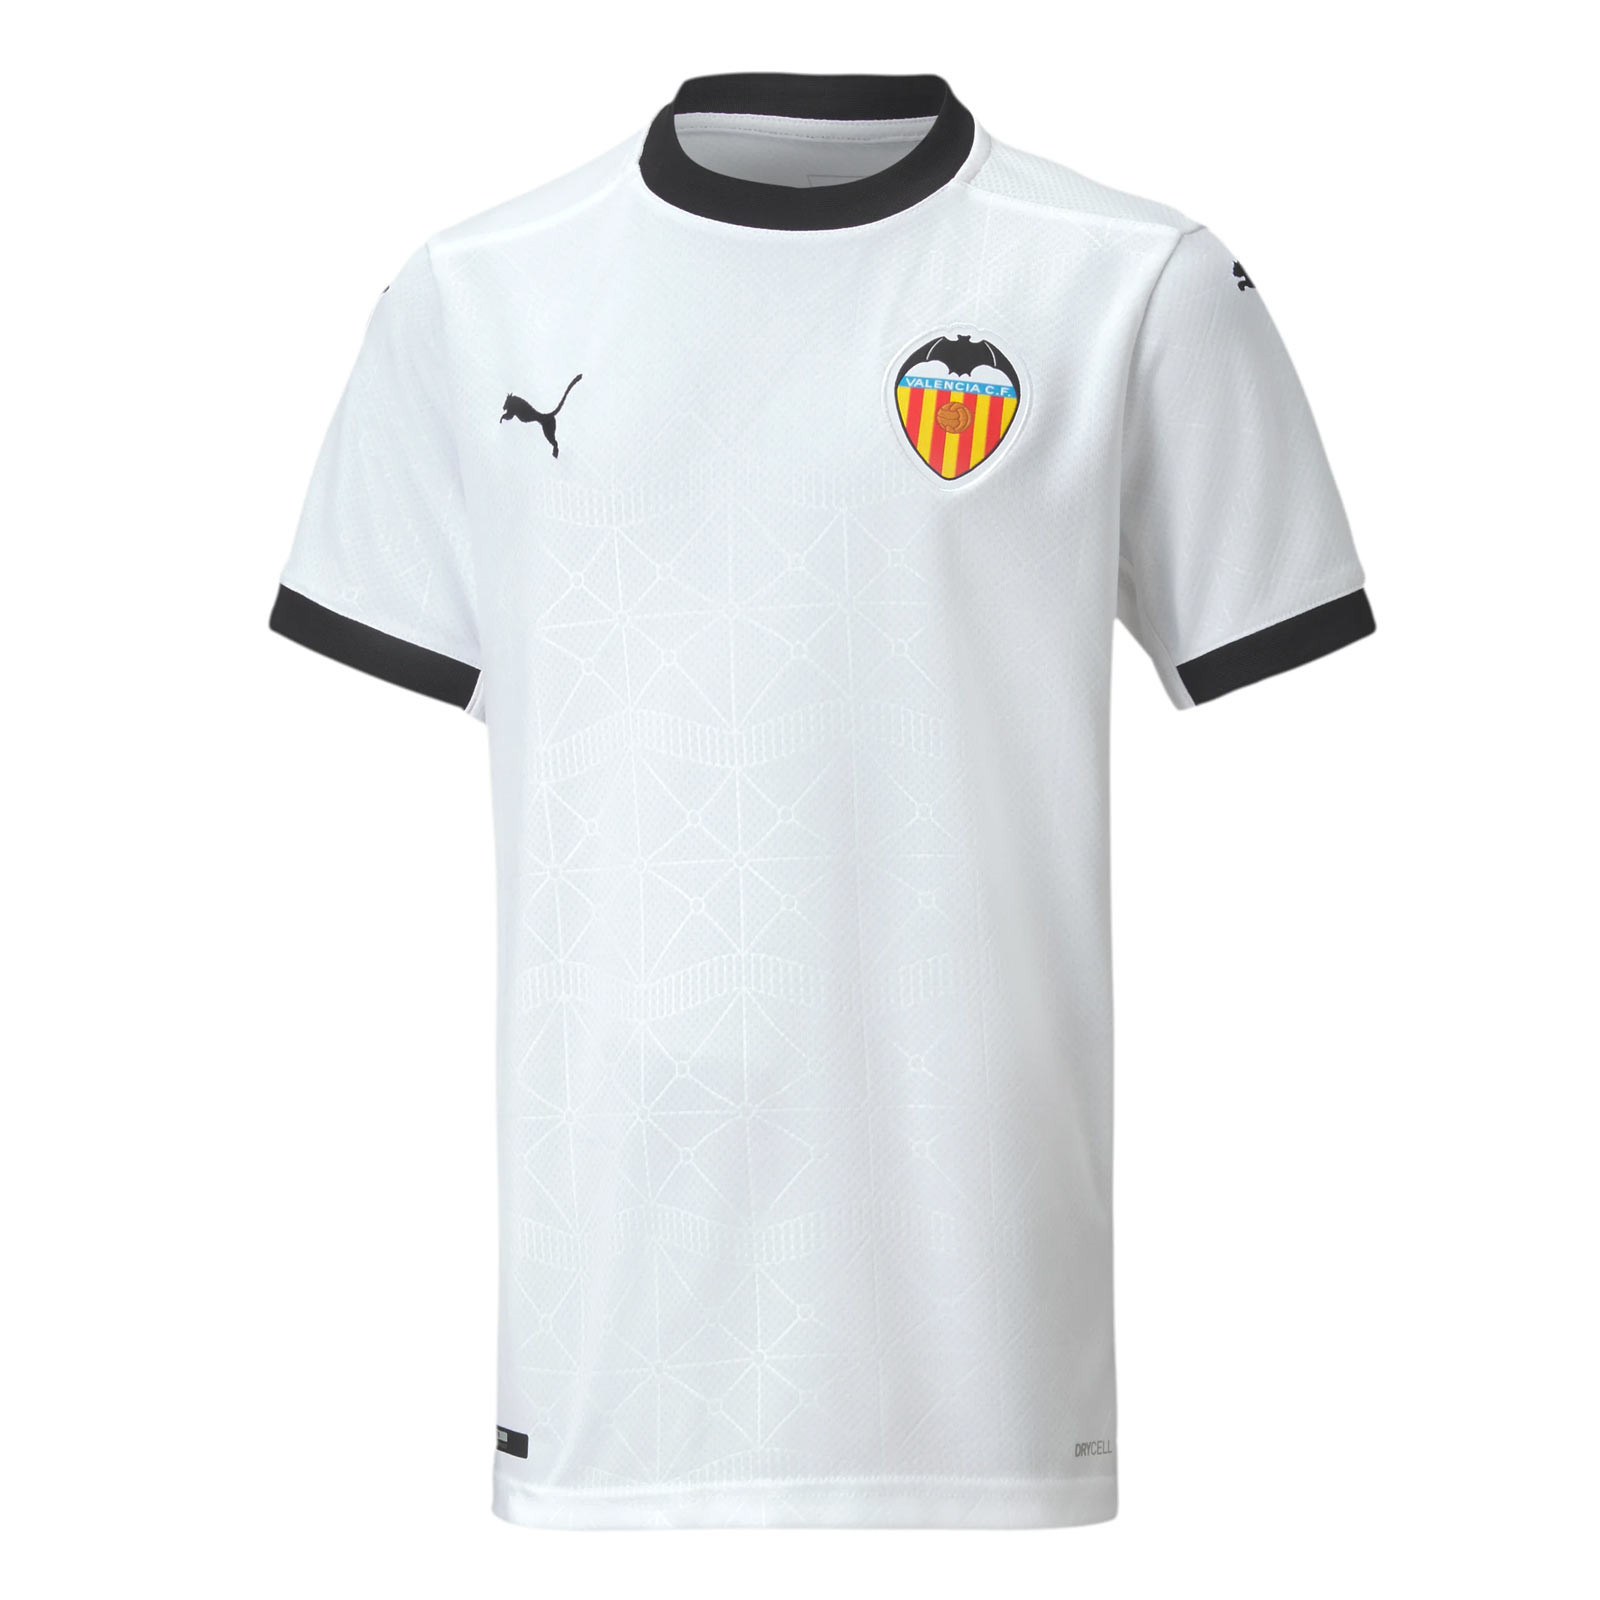 Camiseta Puma Valencia niño 2020 2021 | futbolmaniaKids